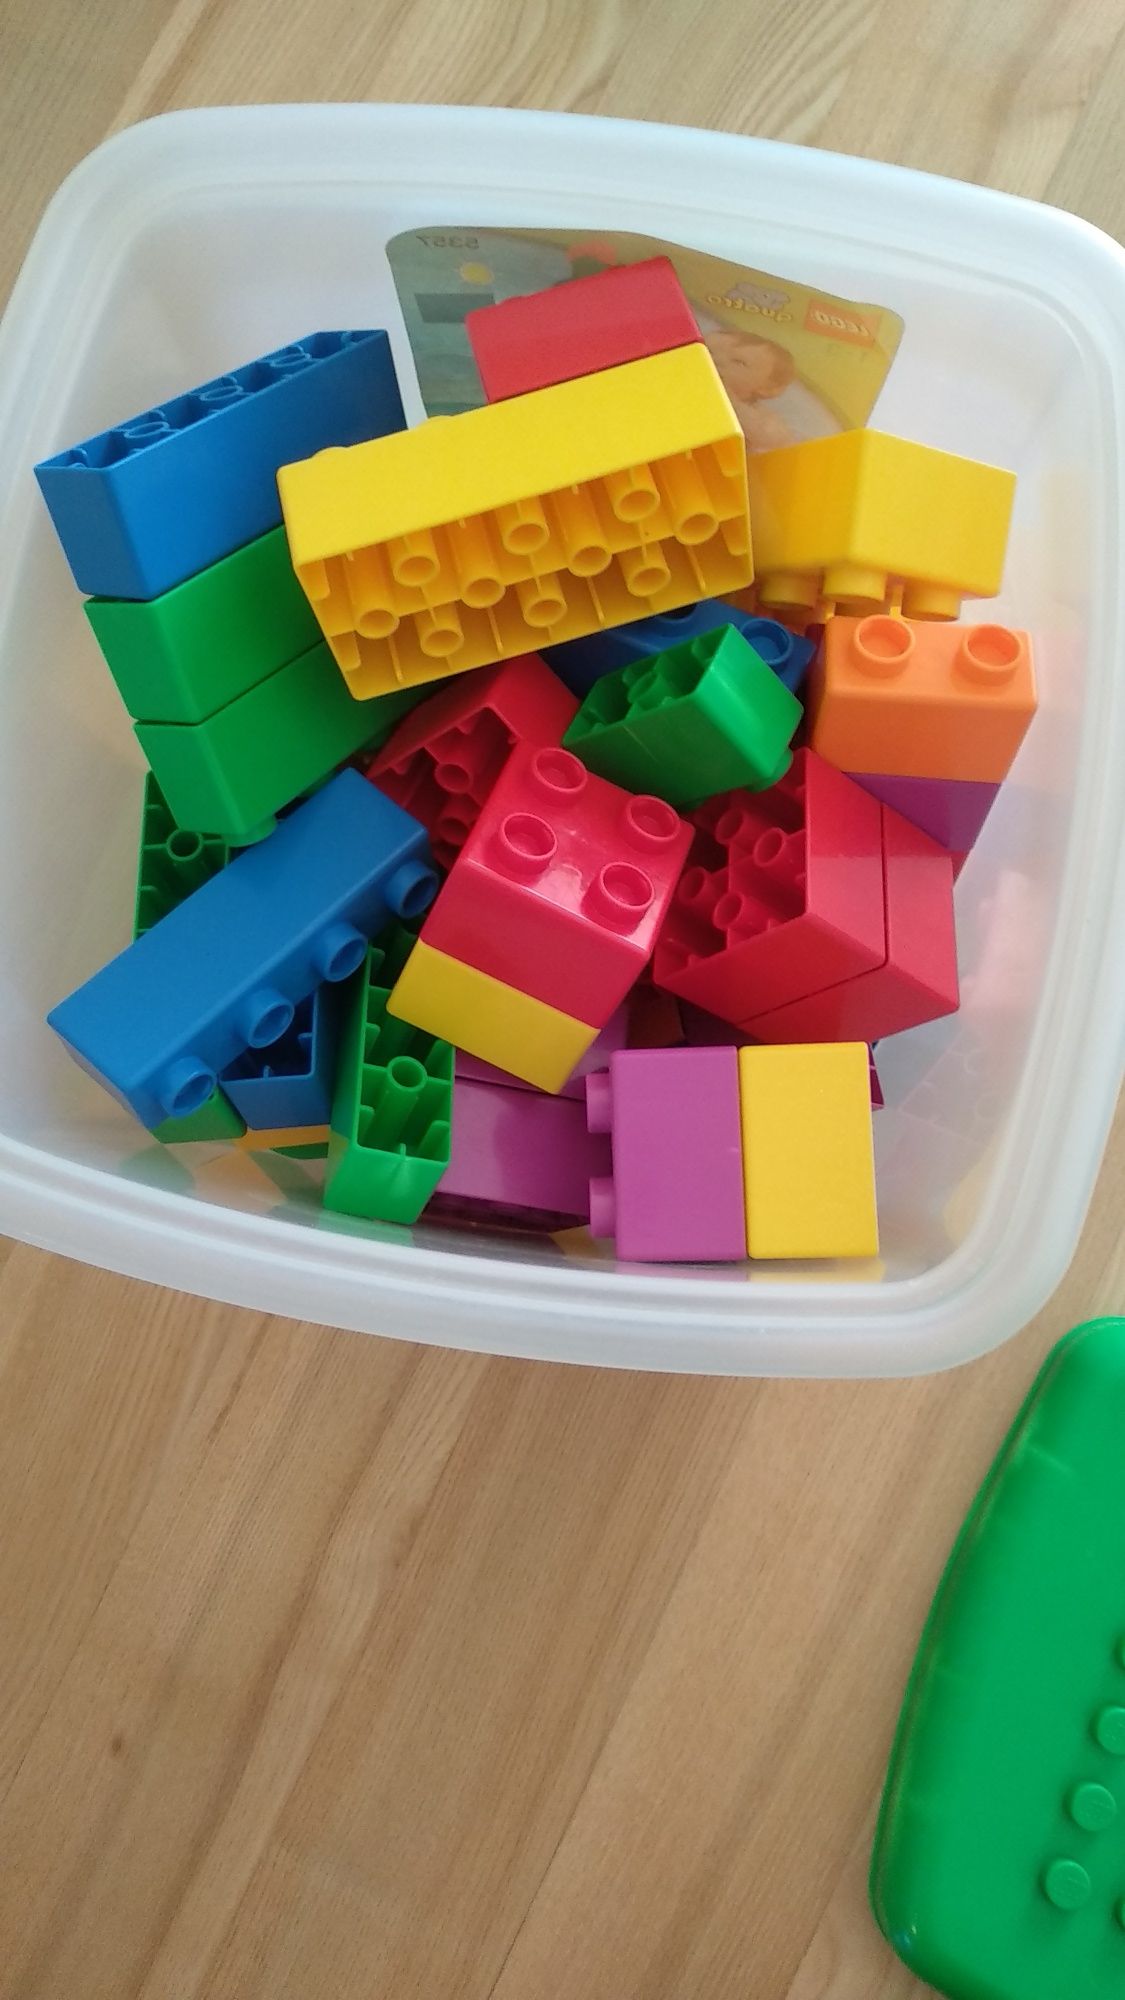 Klocki LEGO quatro pudło